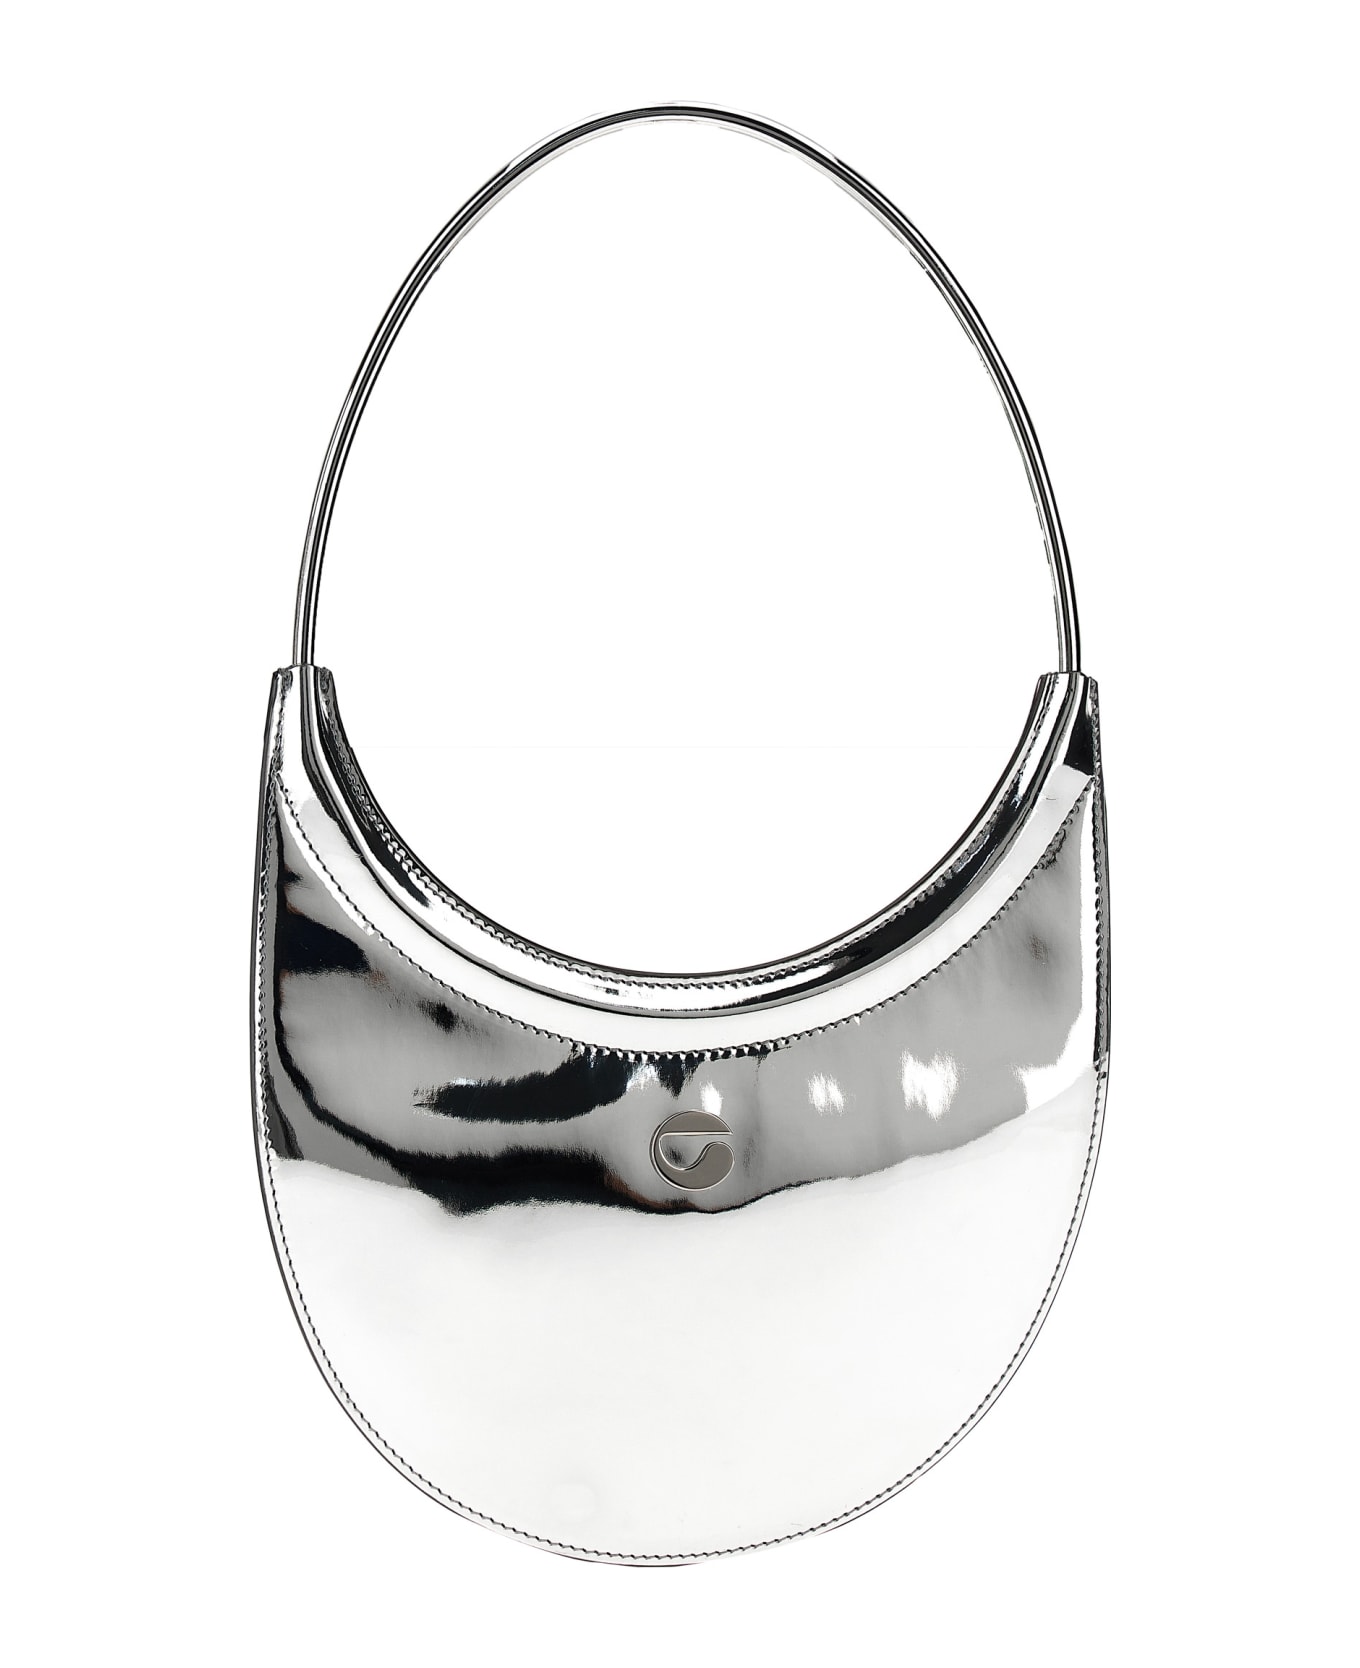 Coperni 'ring Swipe Bag' Handbag - Silver トートバッグ